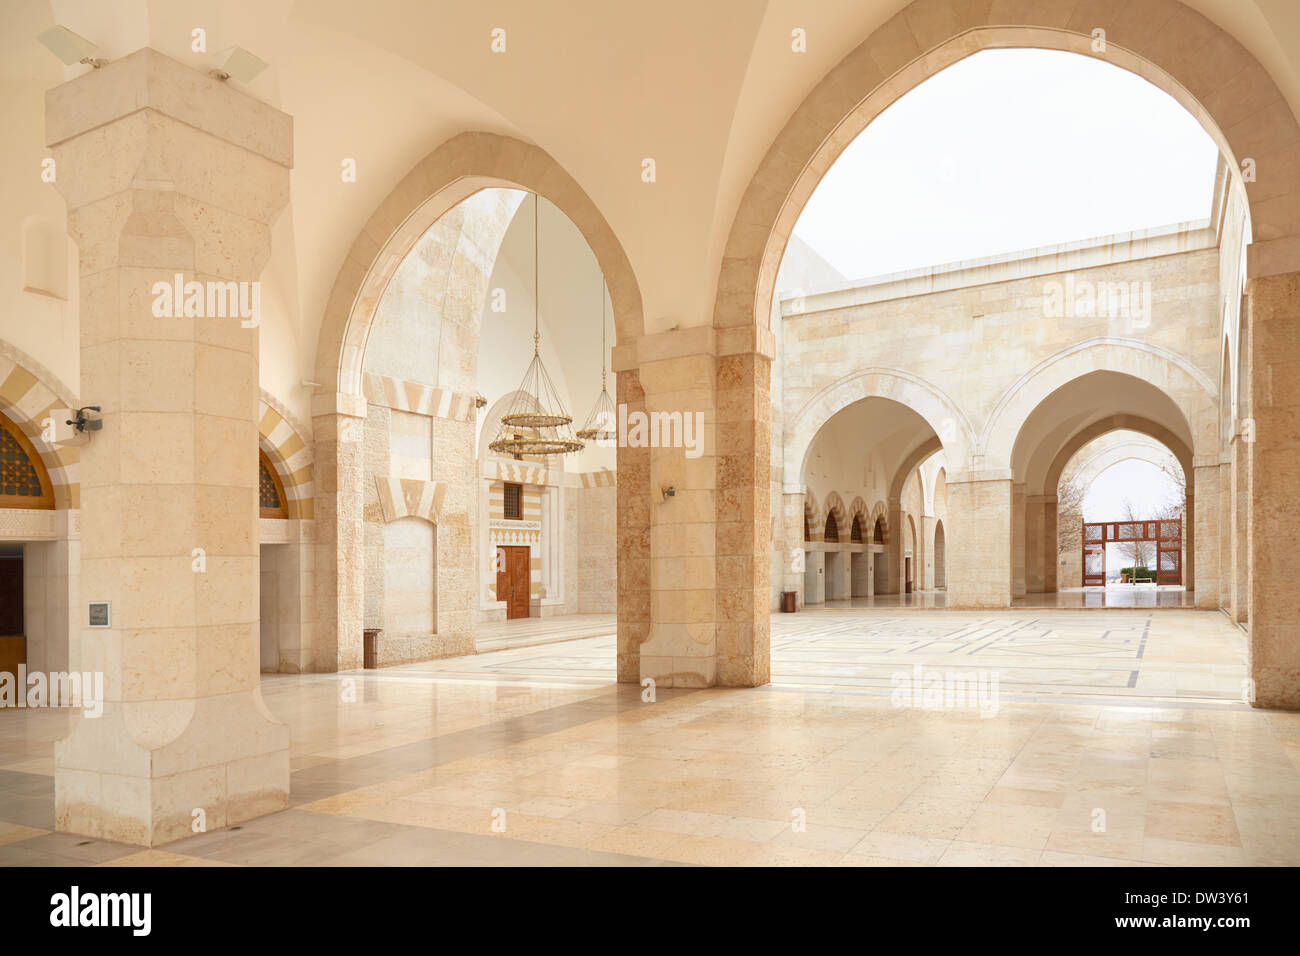 El Rey Hussein Bin Talal mezquita arcade en Amman, Jordania Foto de stock